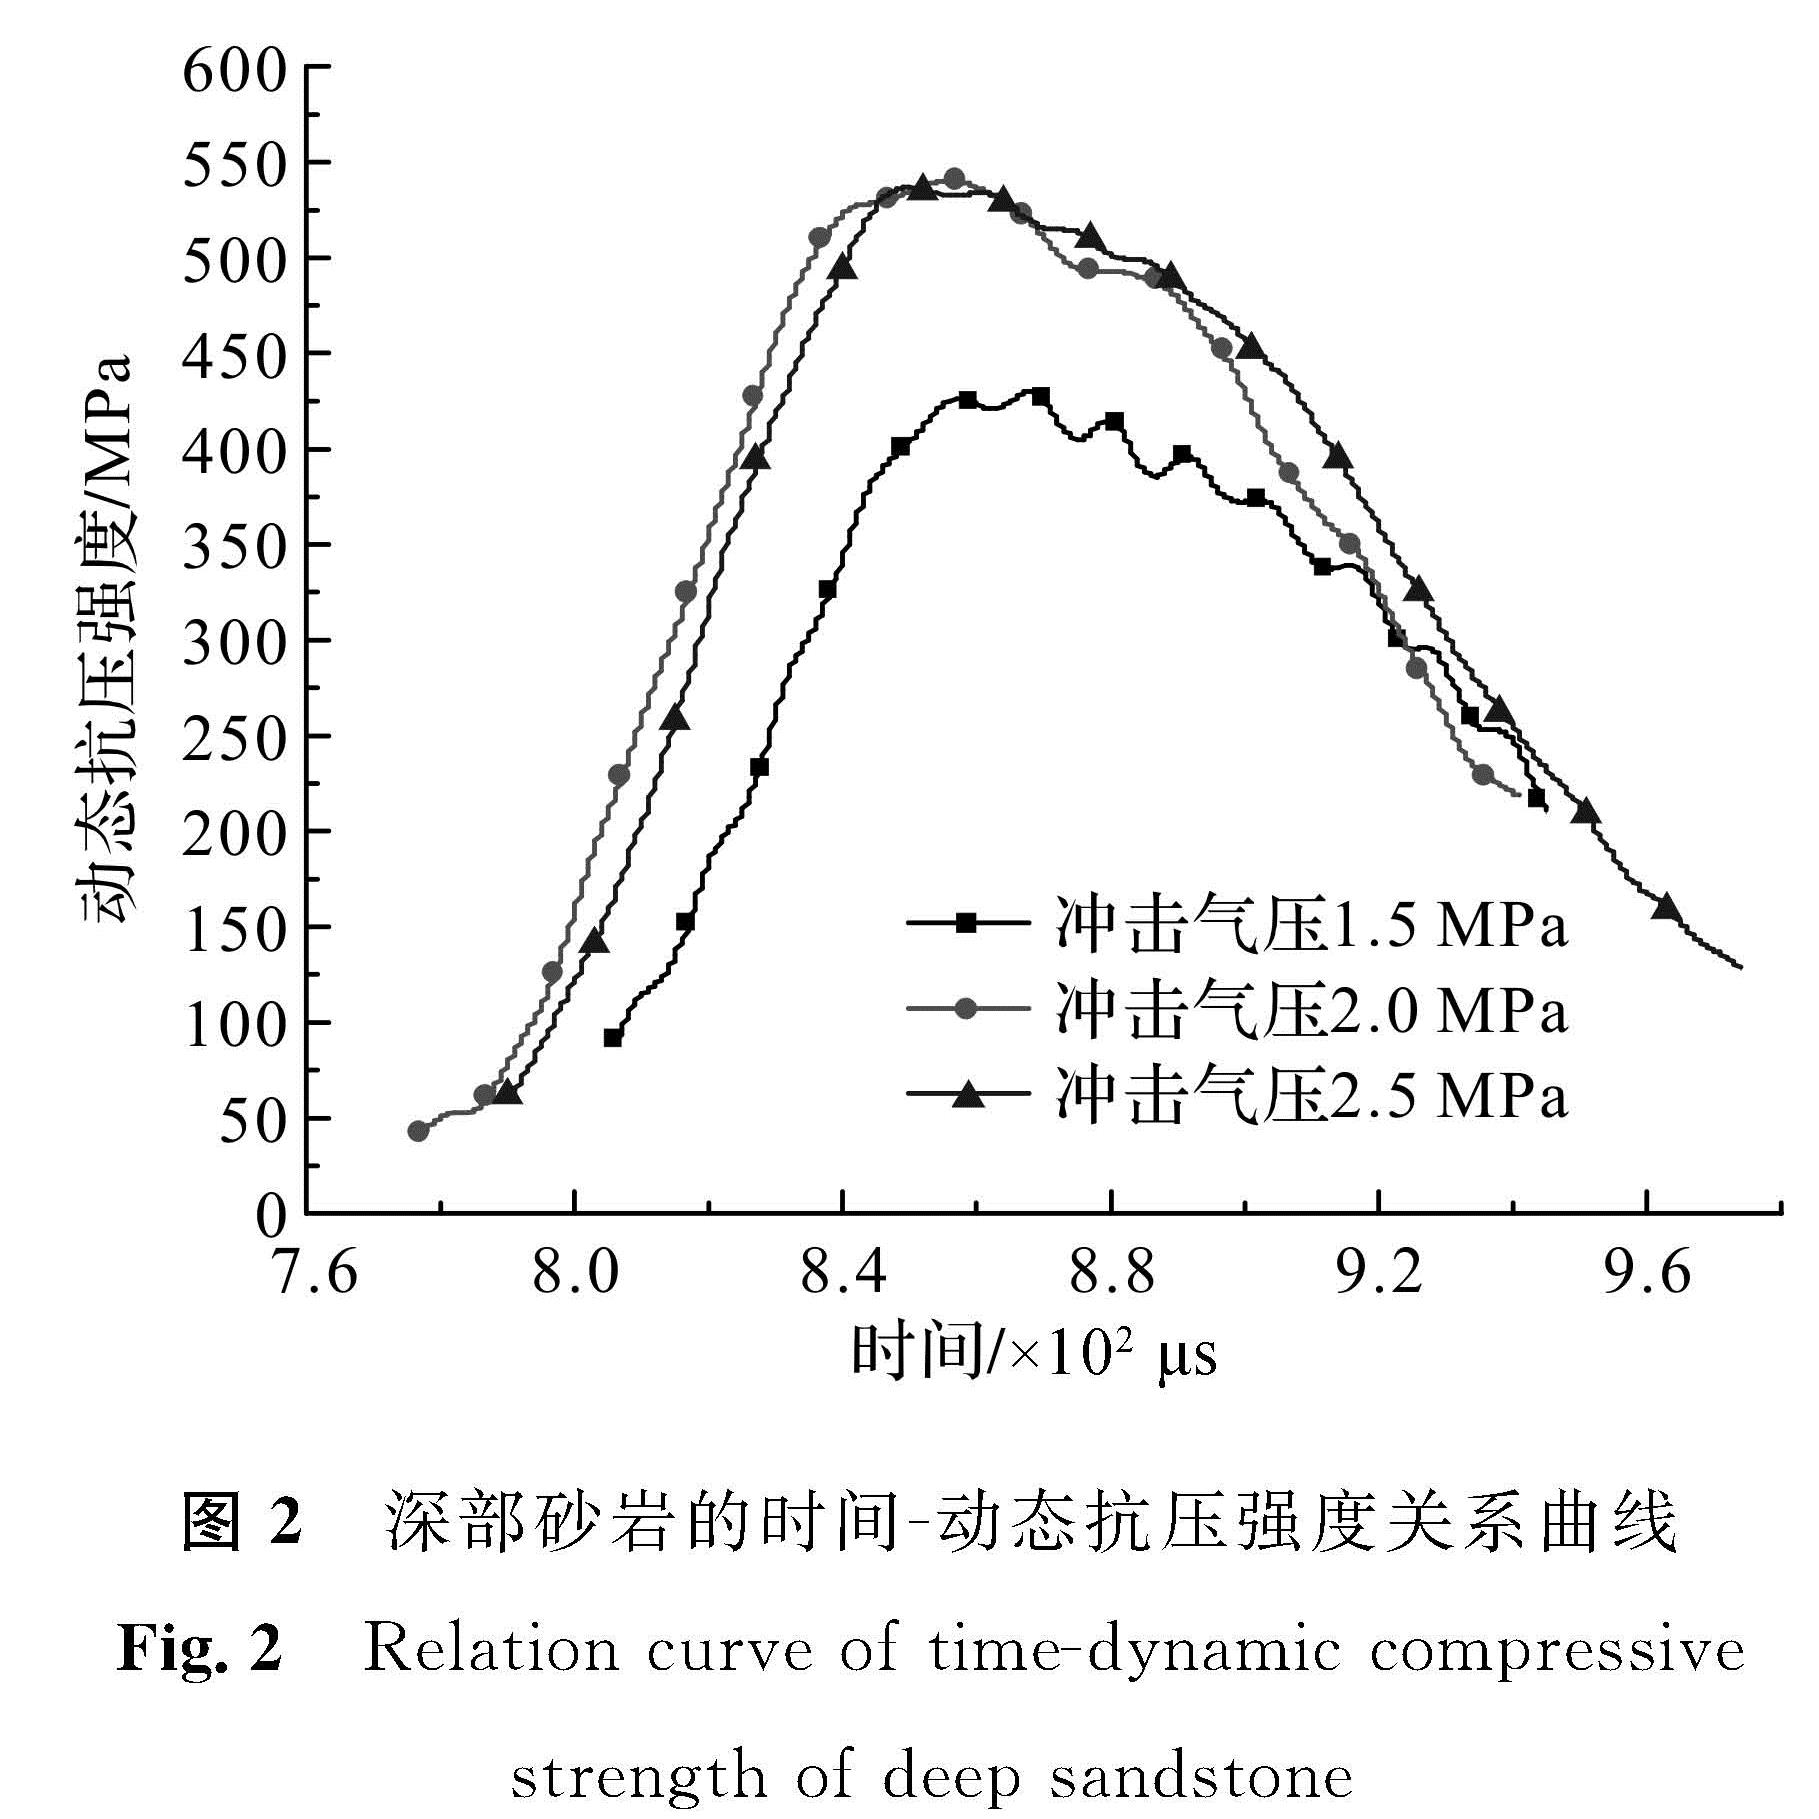 图2 深部砂岩的时间-动态抗压强度关系曲线<br/>Fig.2 Relation curve of time-dynamic compressive strength of deep sandstone